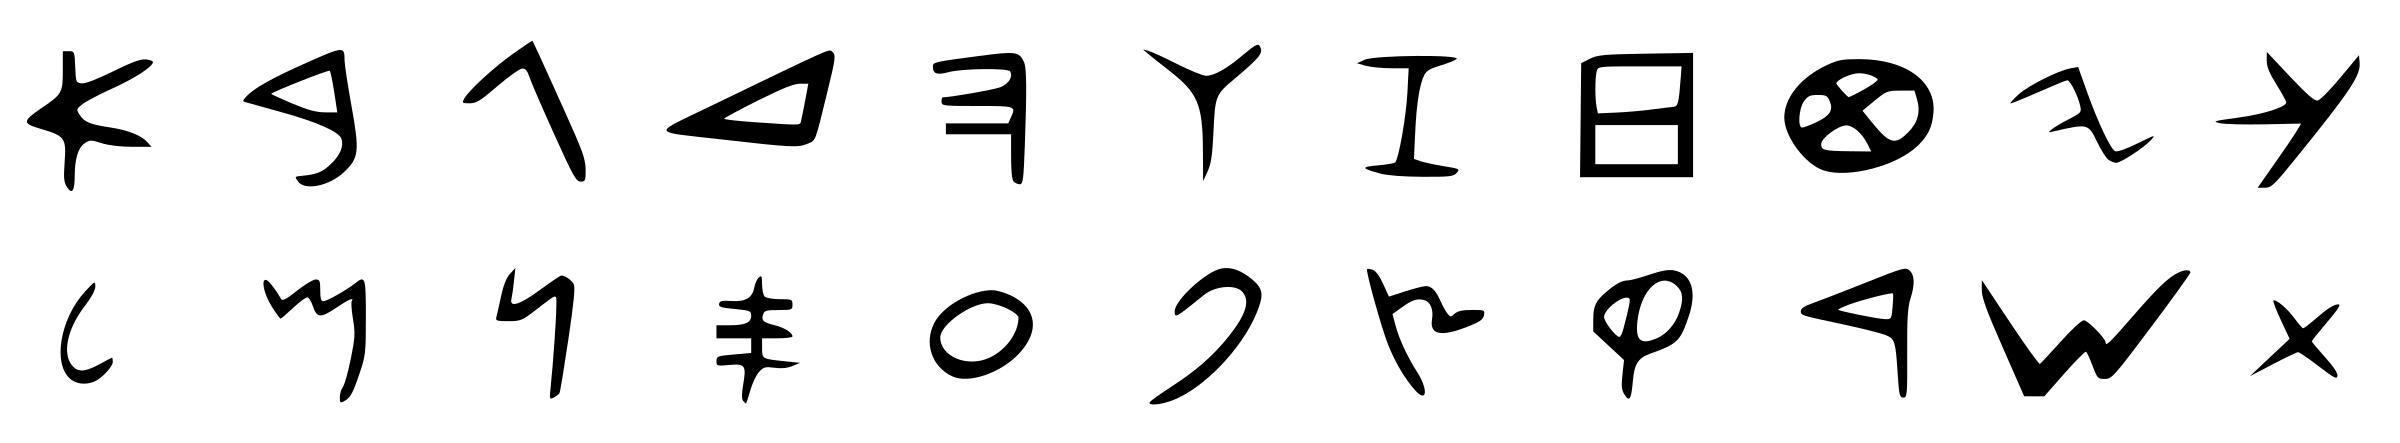 Phoenician alphabet png